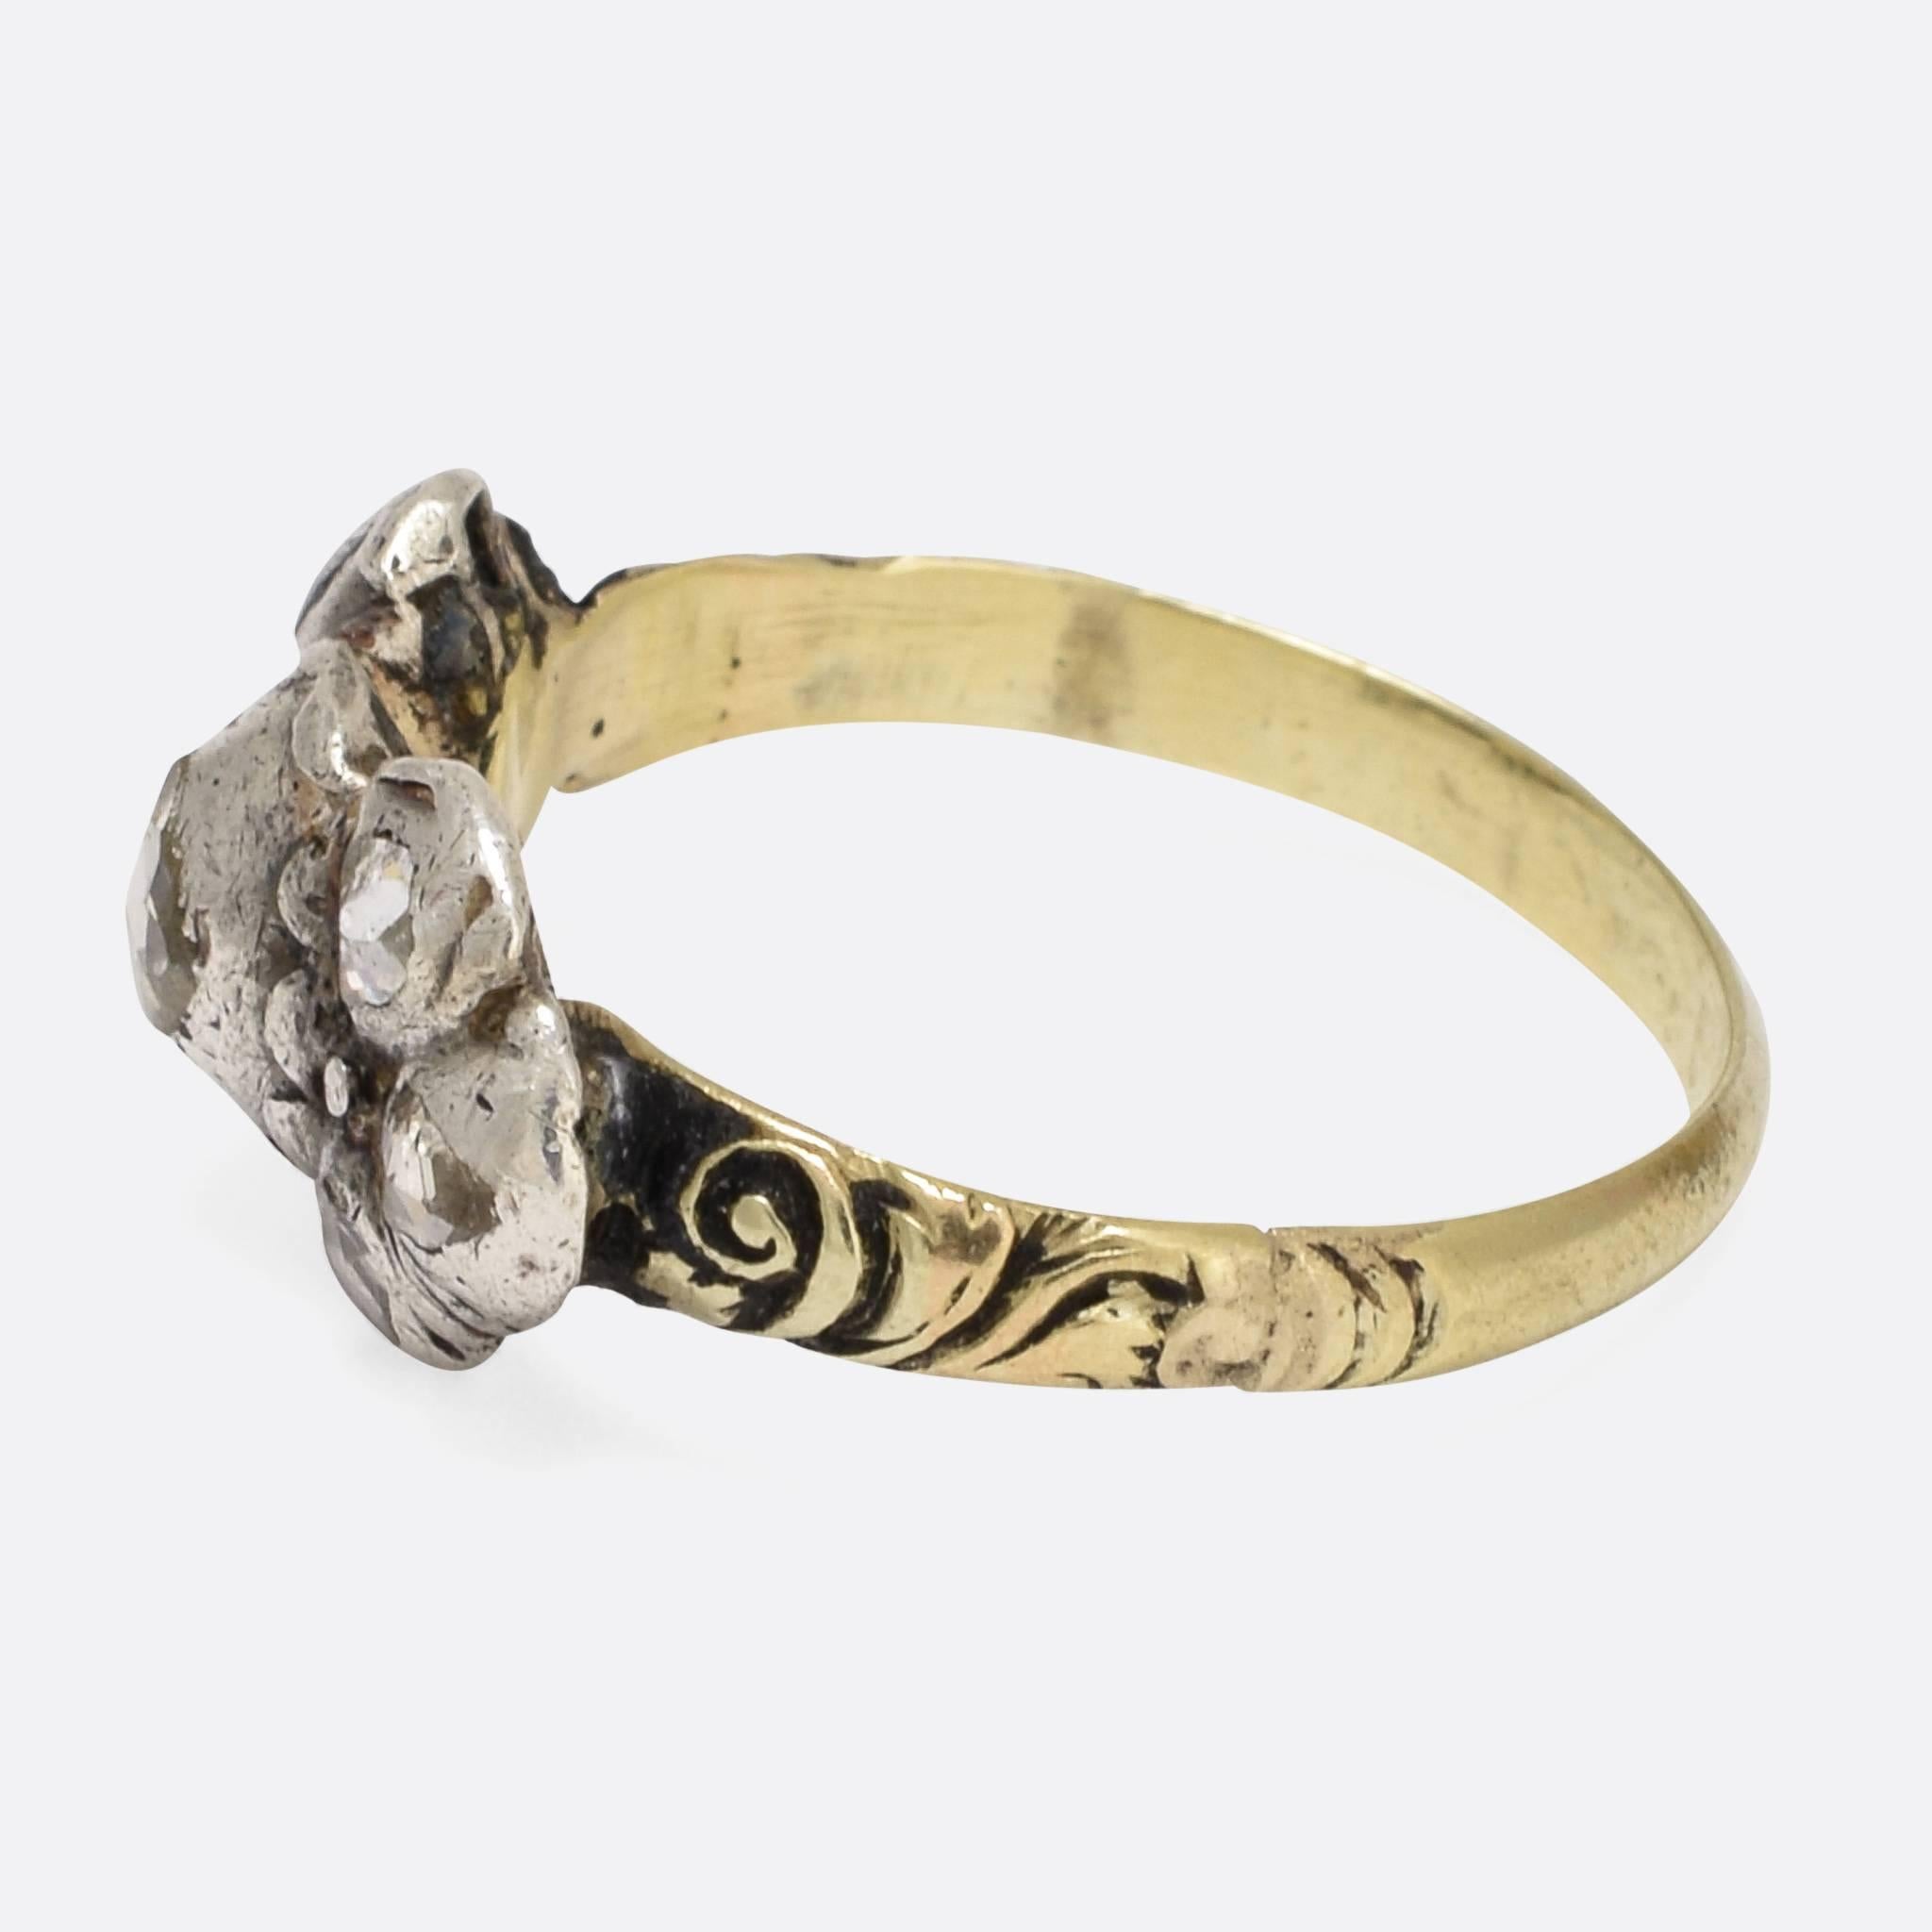 17th century engagement rings